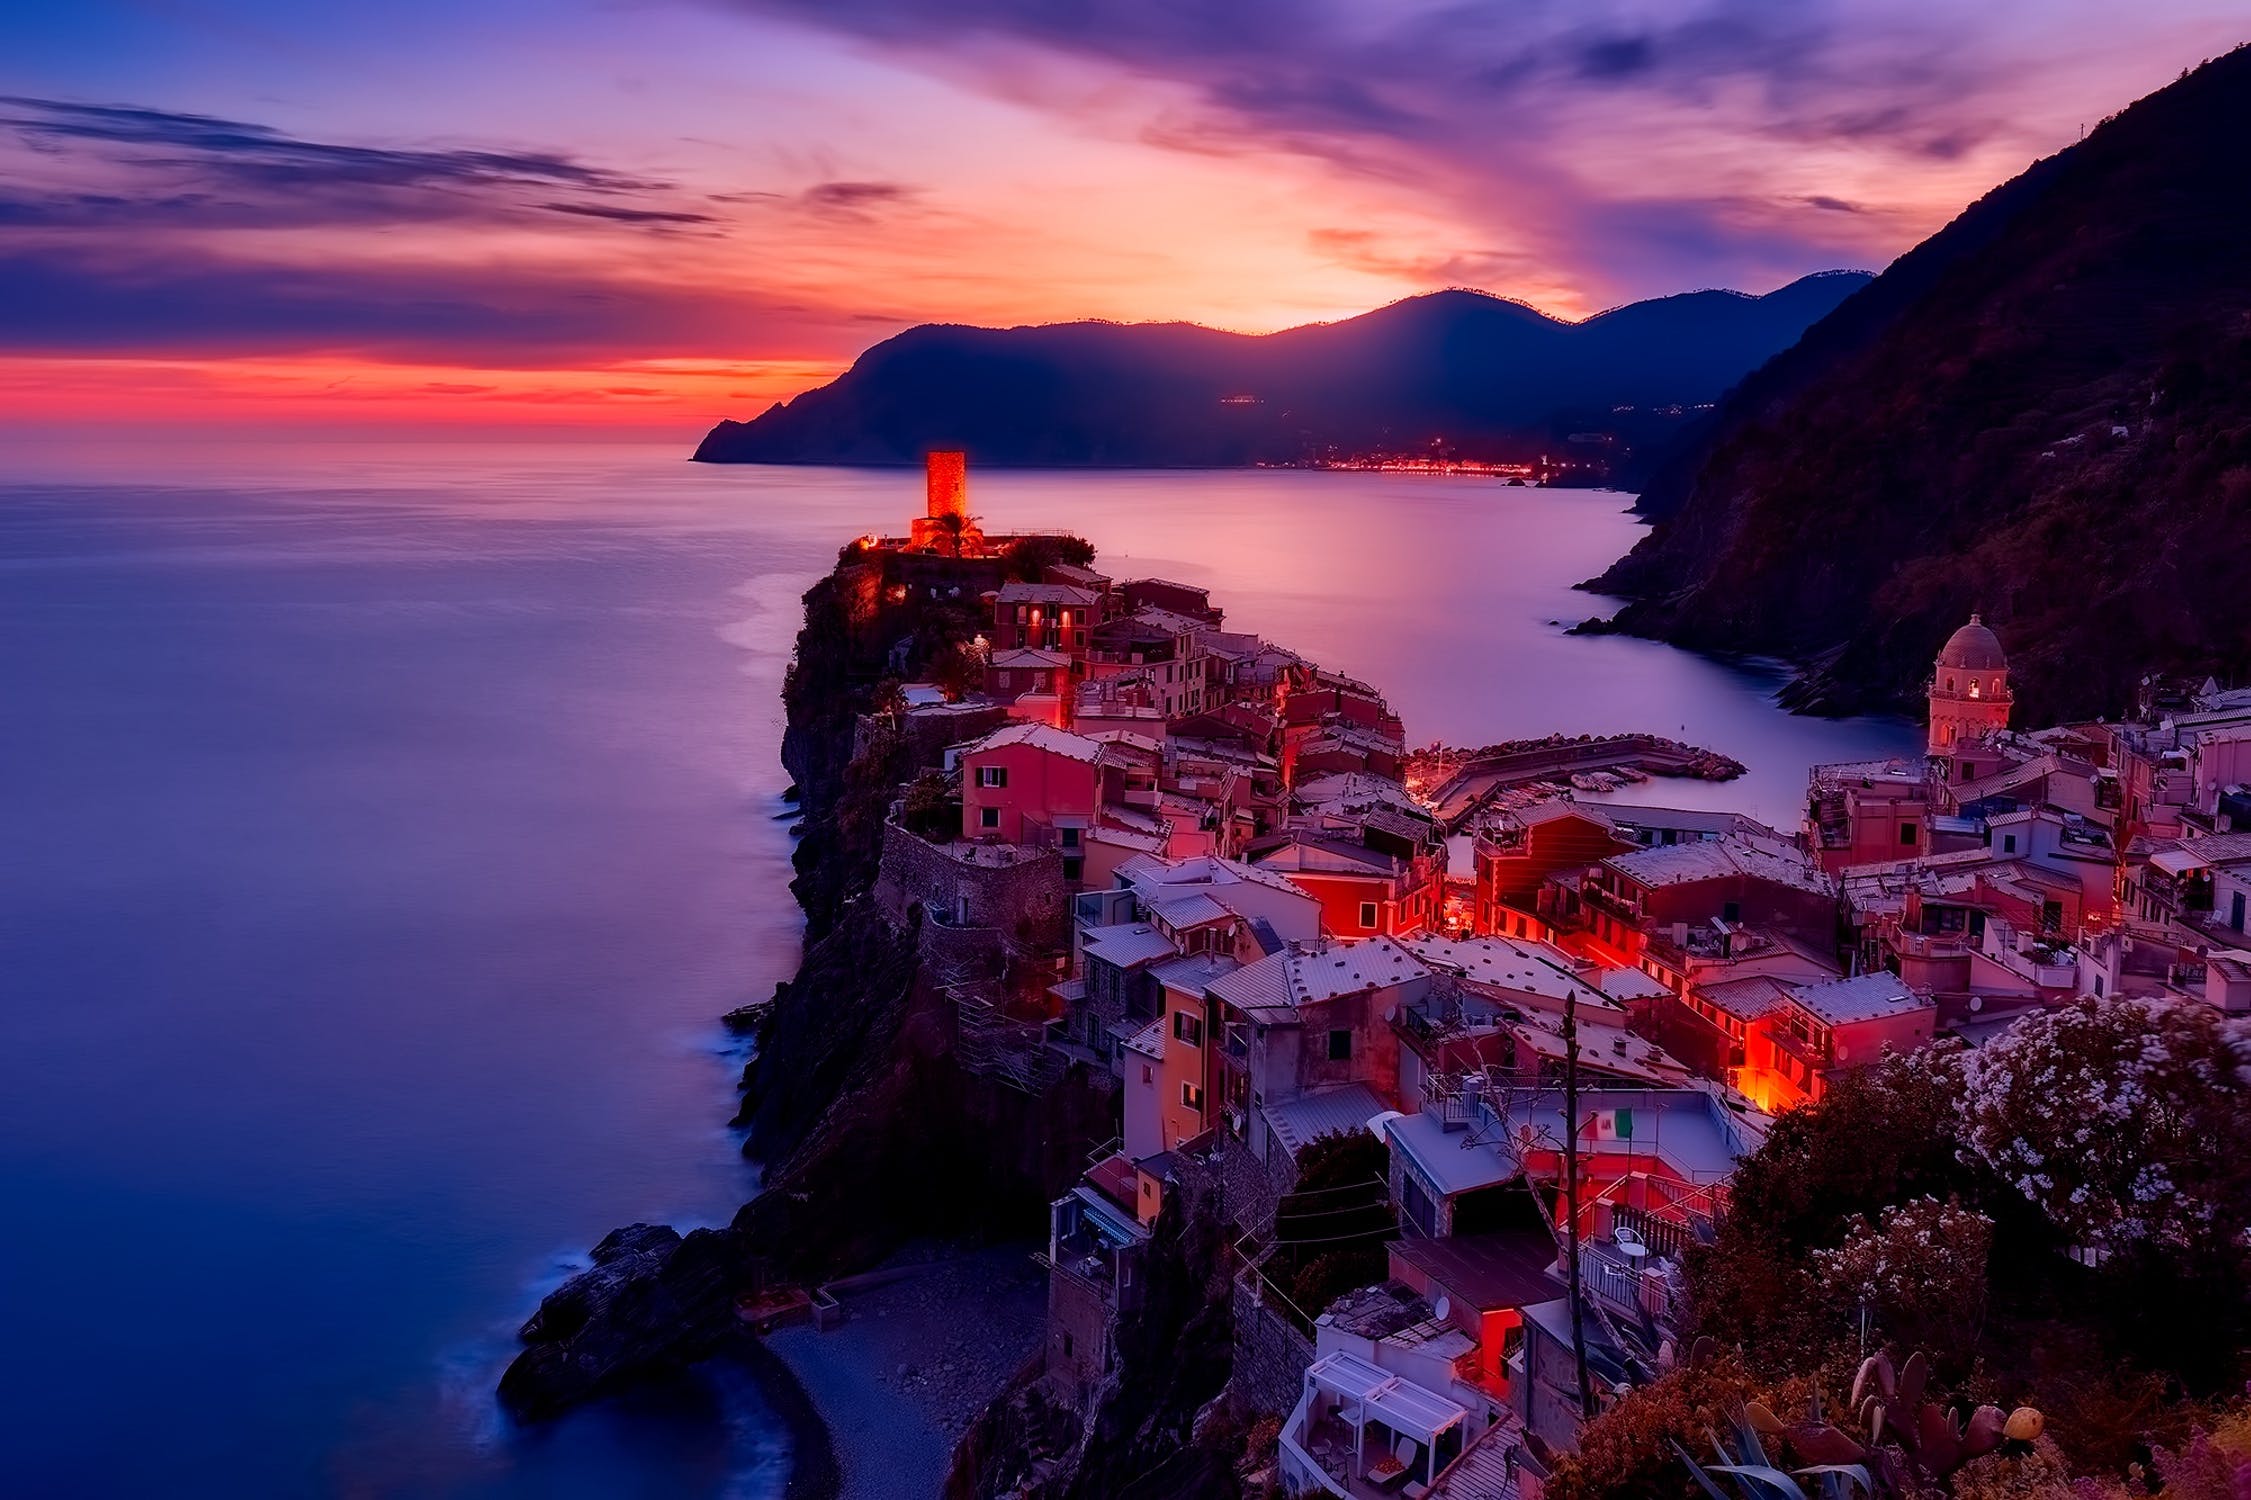 Stunning night time photograph of the Italian Coast